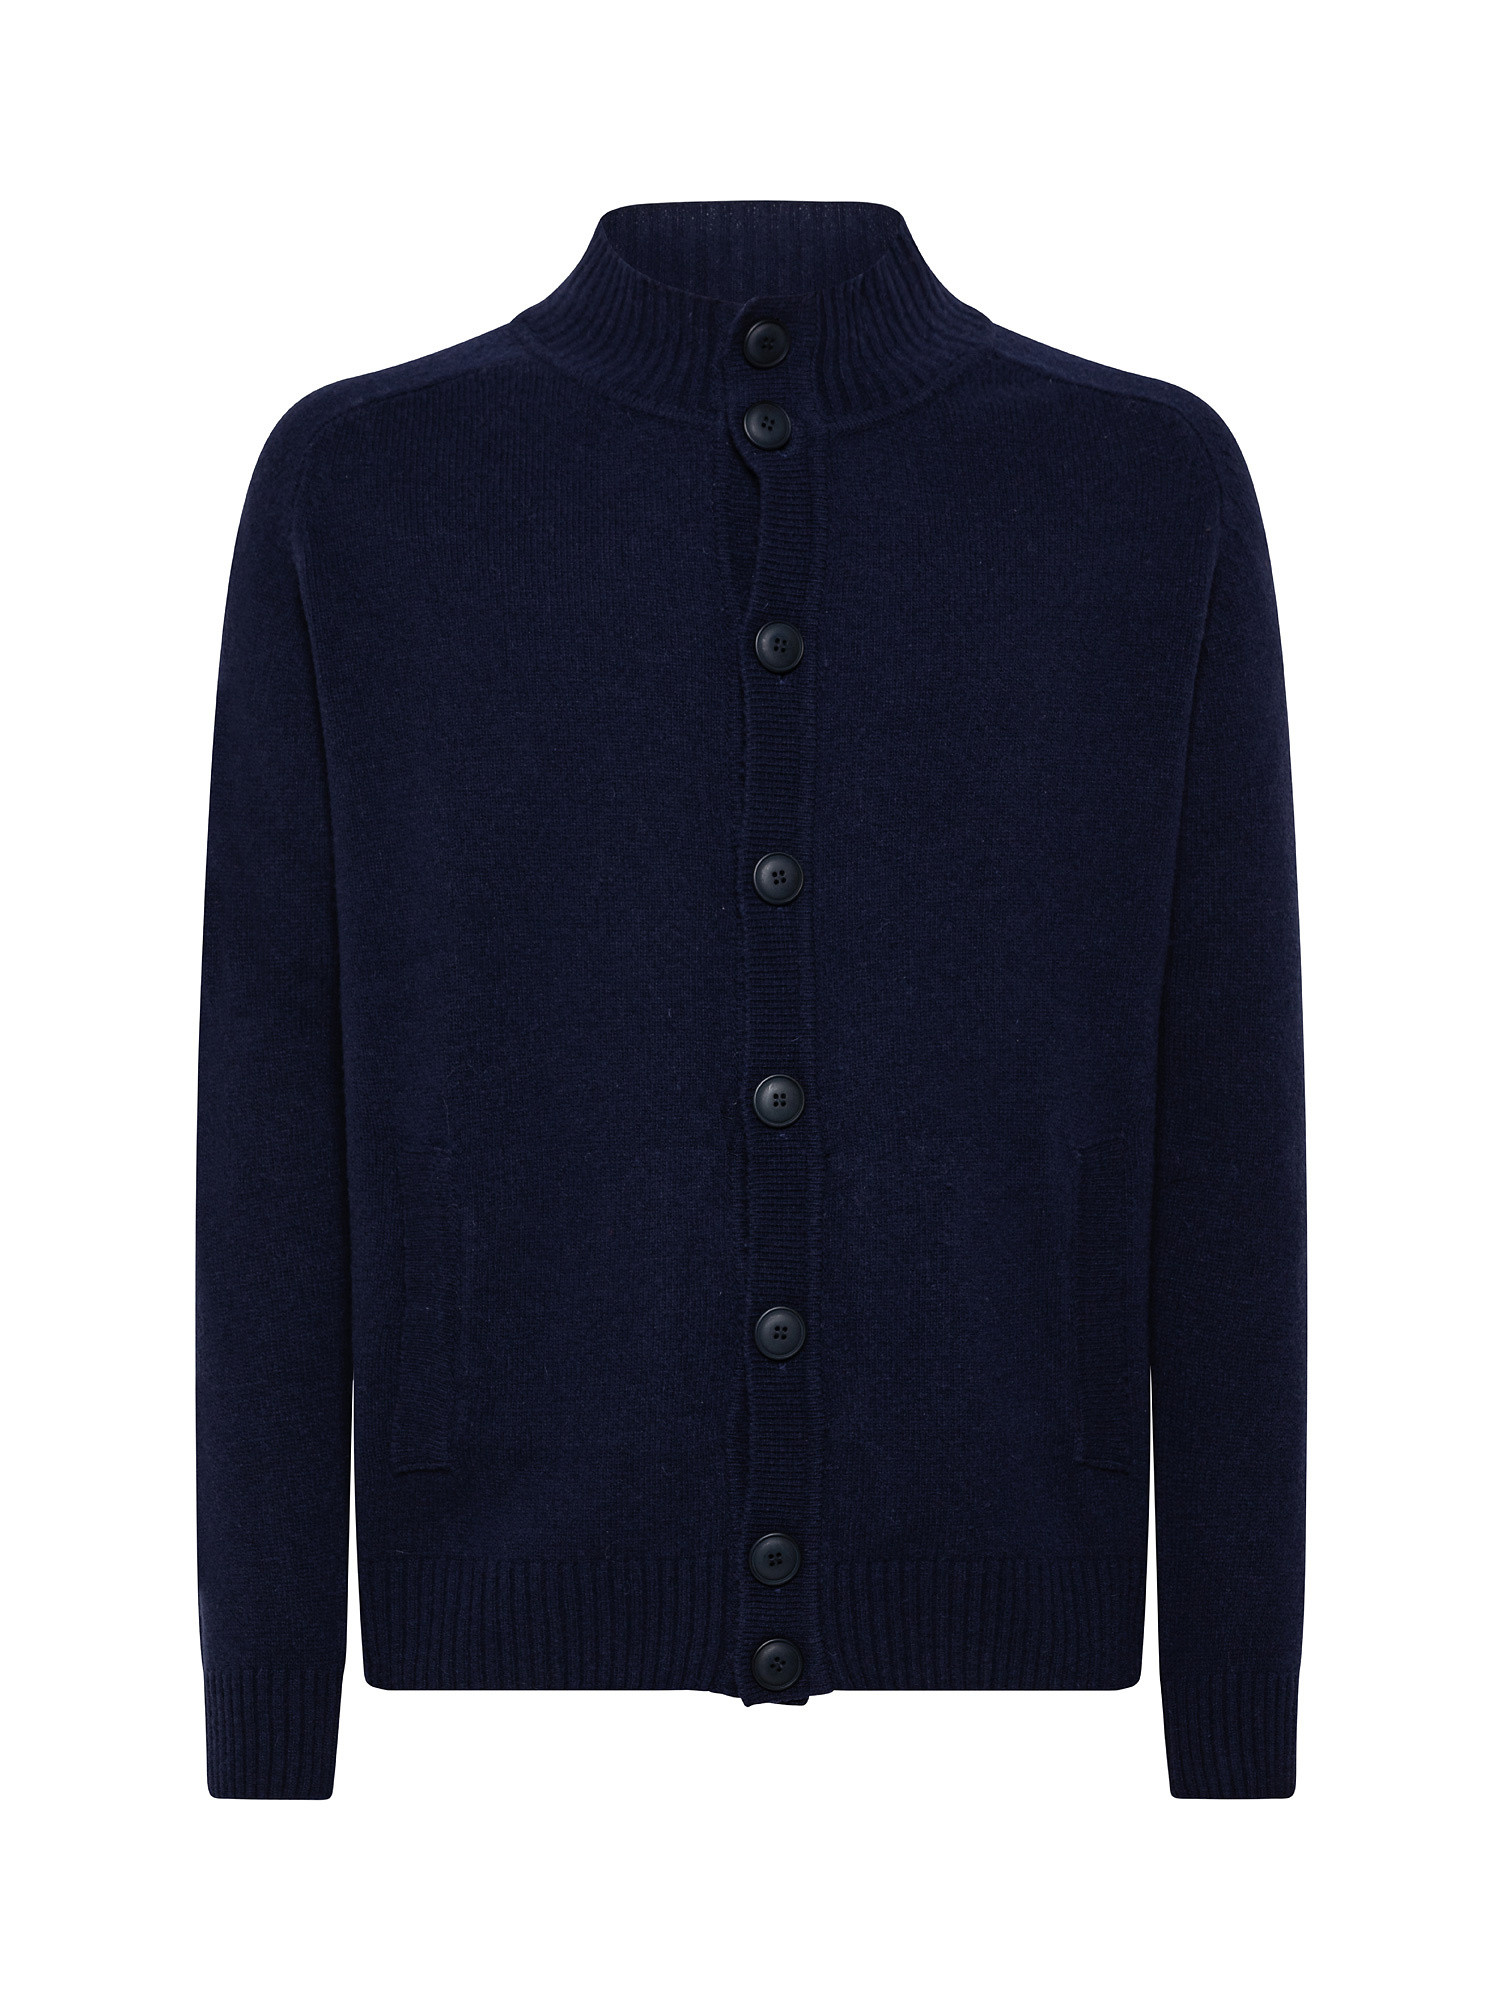 Cardigan misto lana con bottoni, Blu scuro, large image number 0